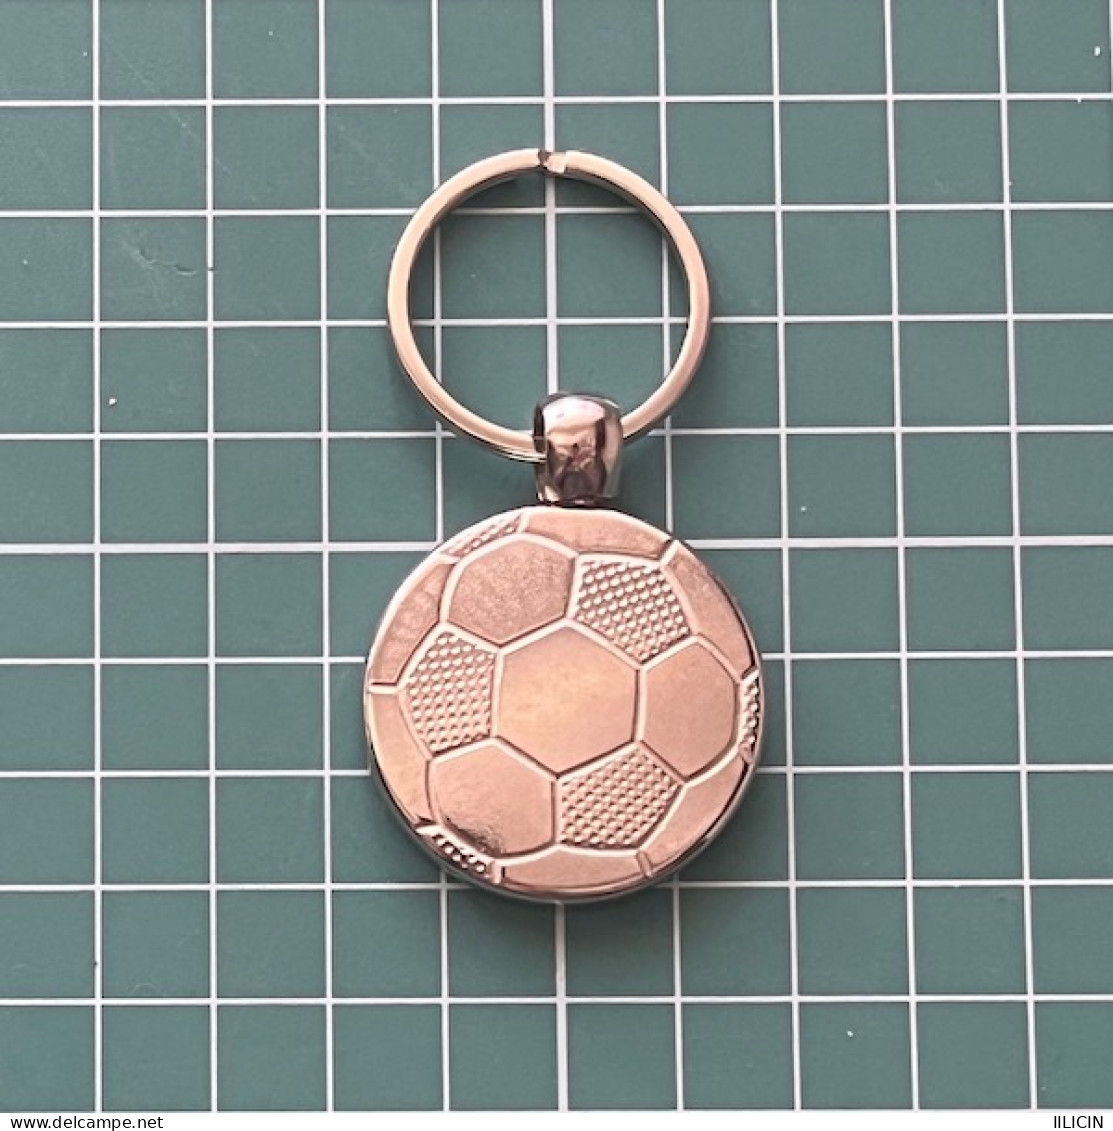 Pendant Keychain Souvenir SU000247 - Football Soccer Scotland Annan Athletic - Apparel, Souvenirs & Other